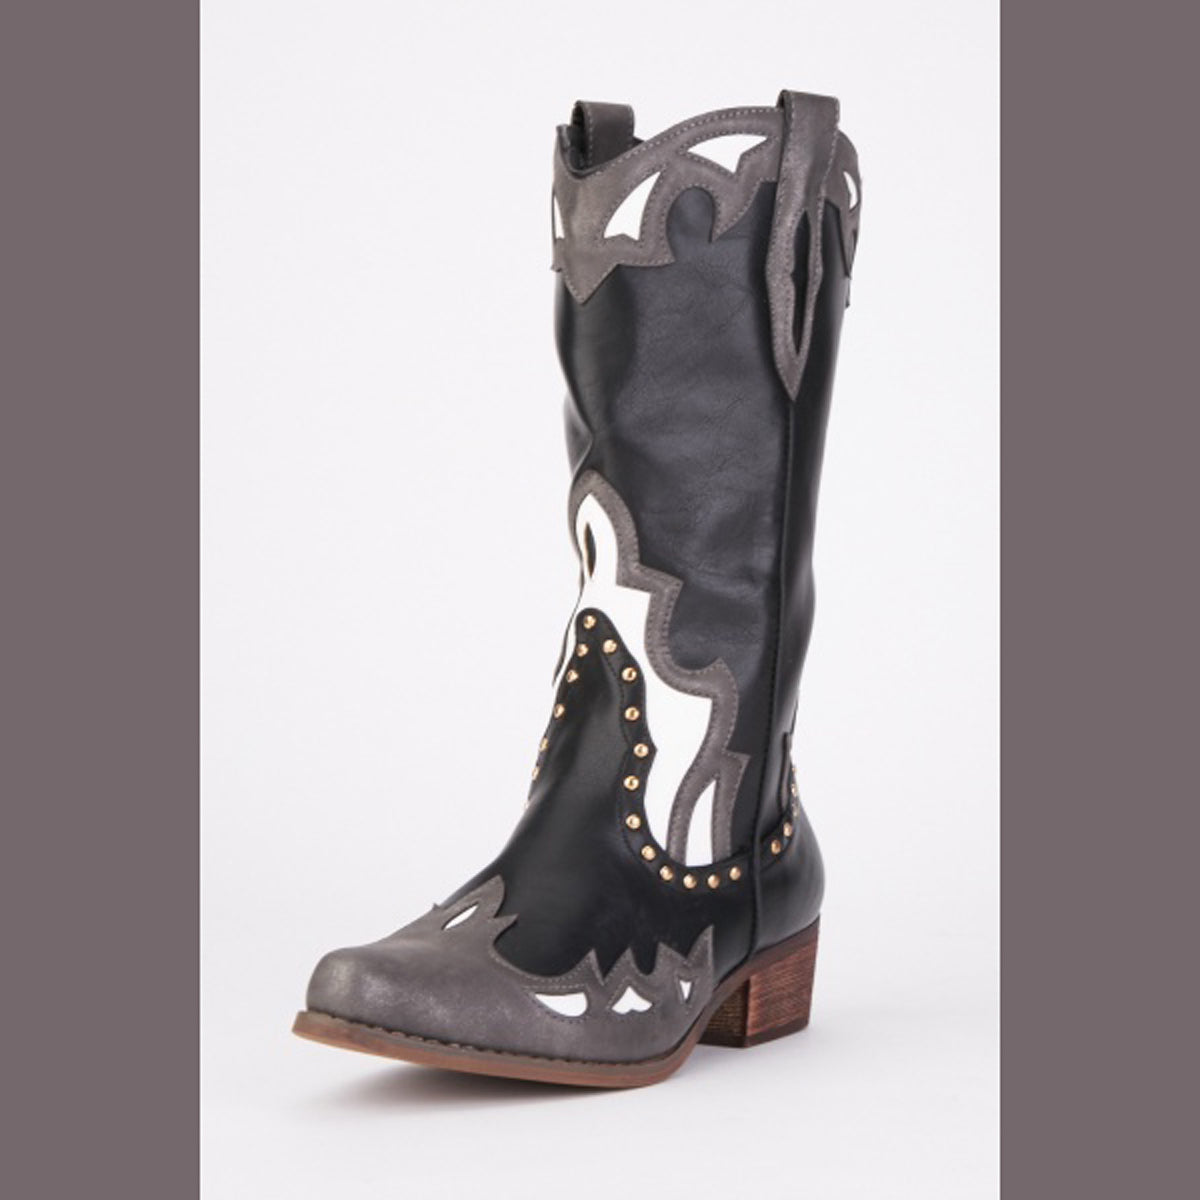 Black Grey Cowboy / Western Boots Flat Heel Upper Calf Length